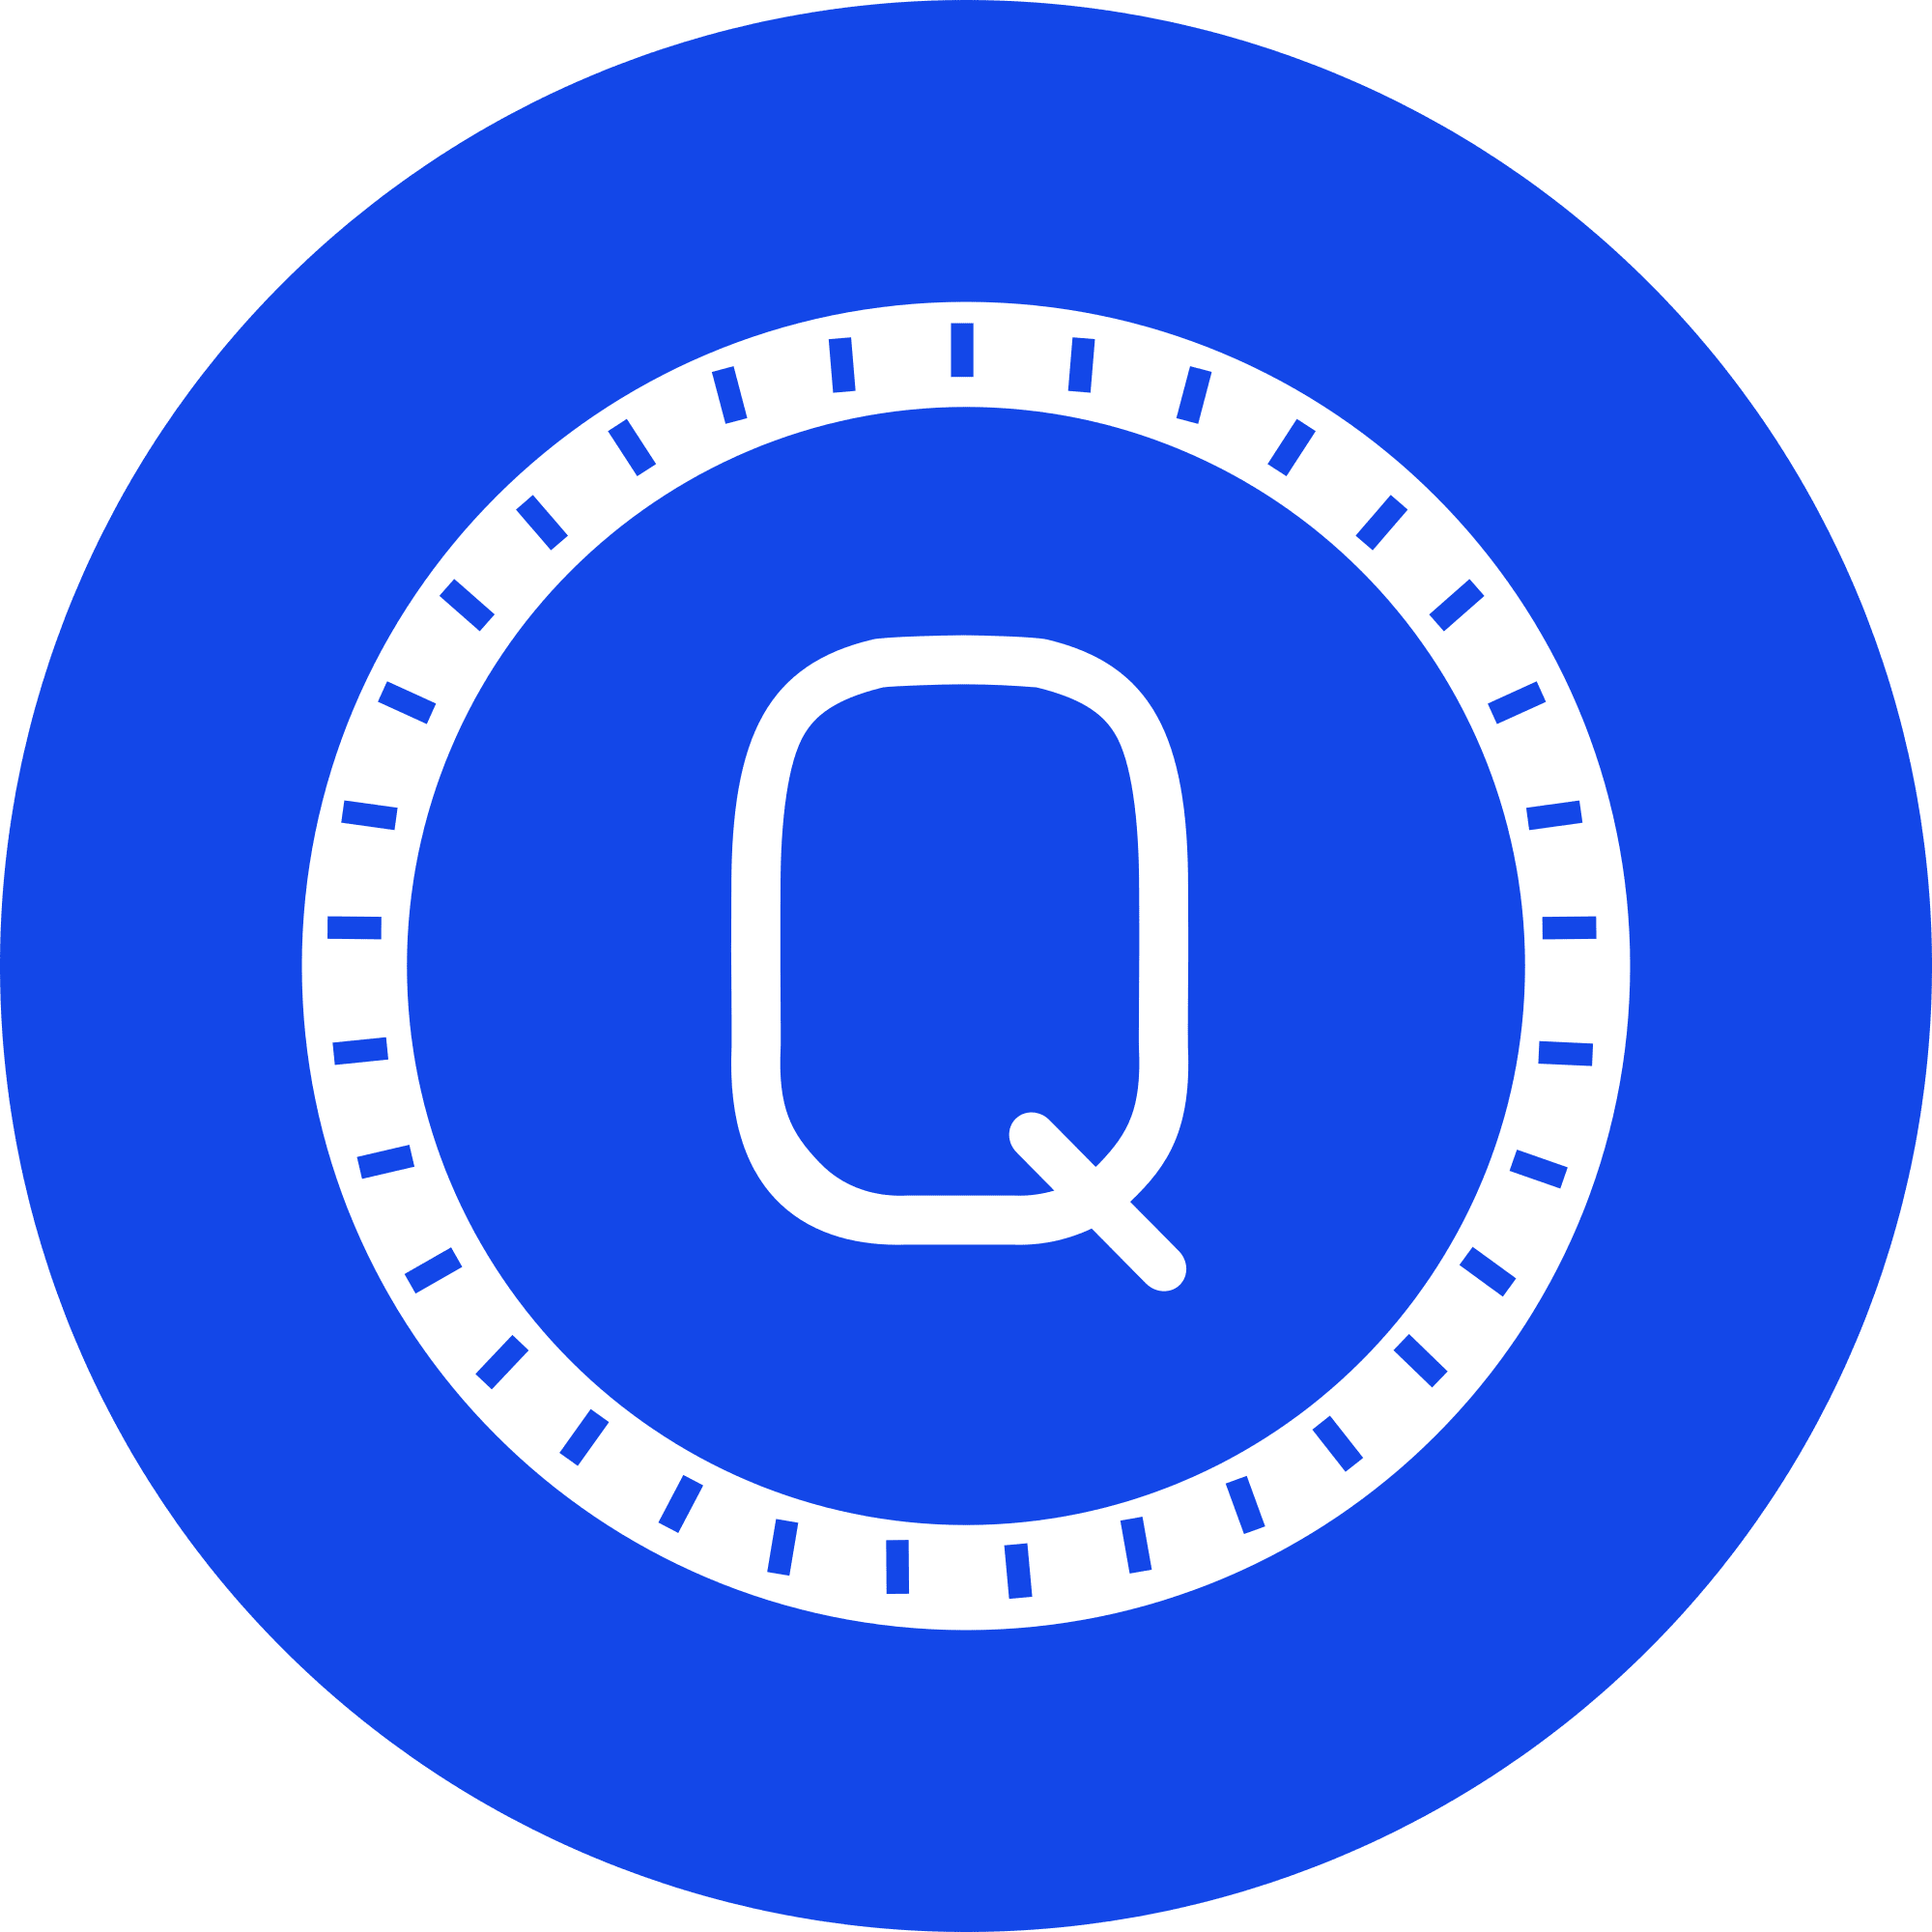 QASH logo in png format